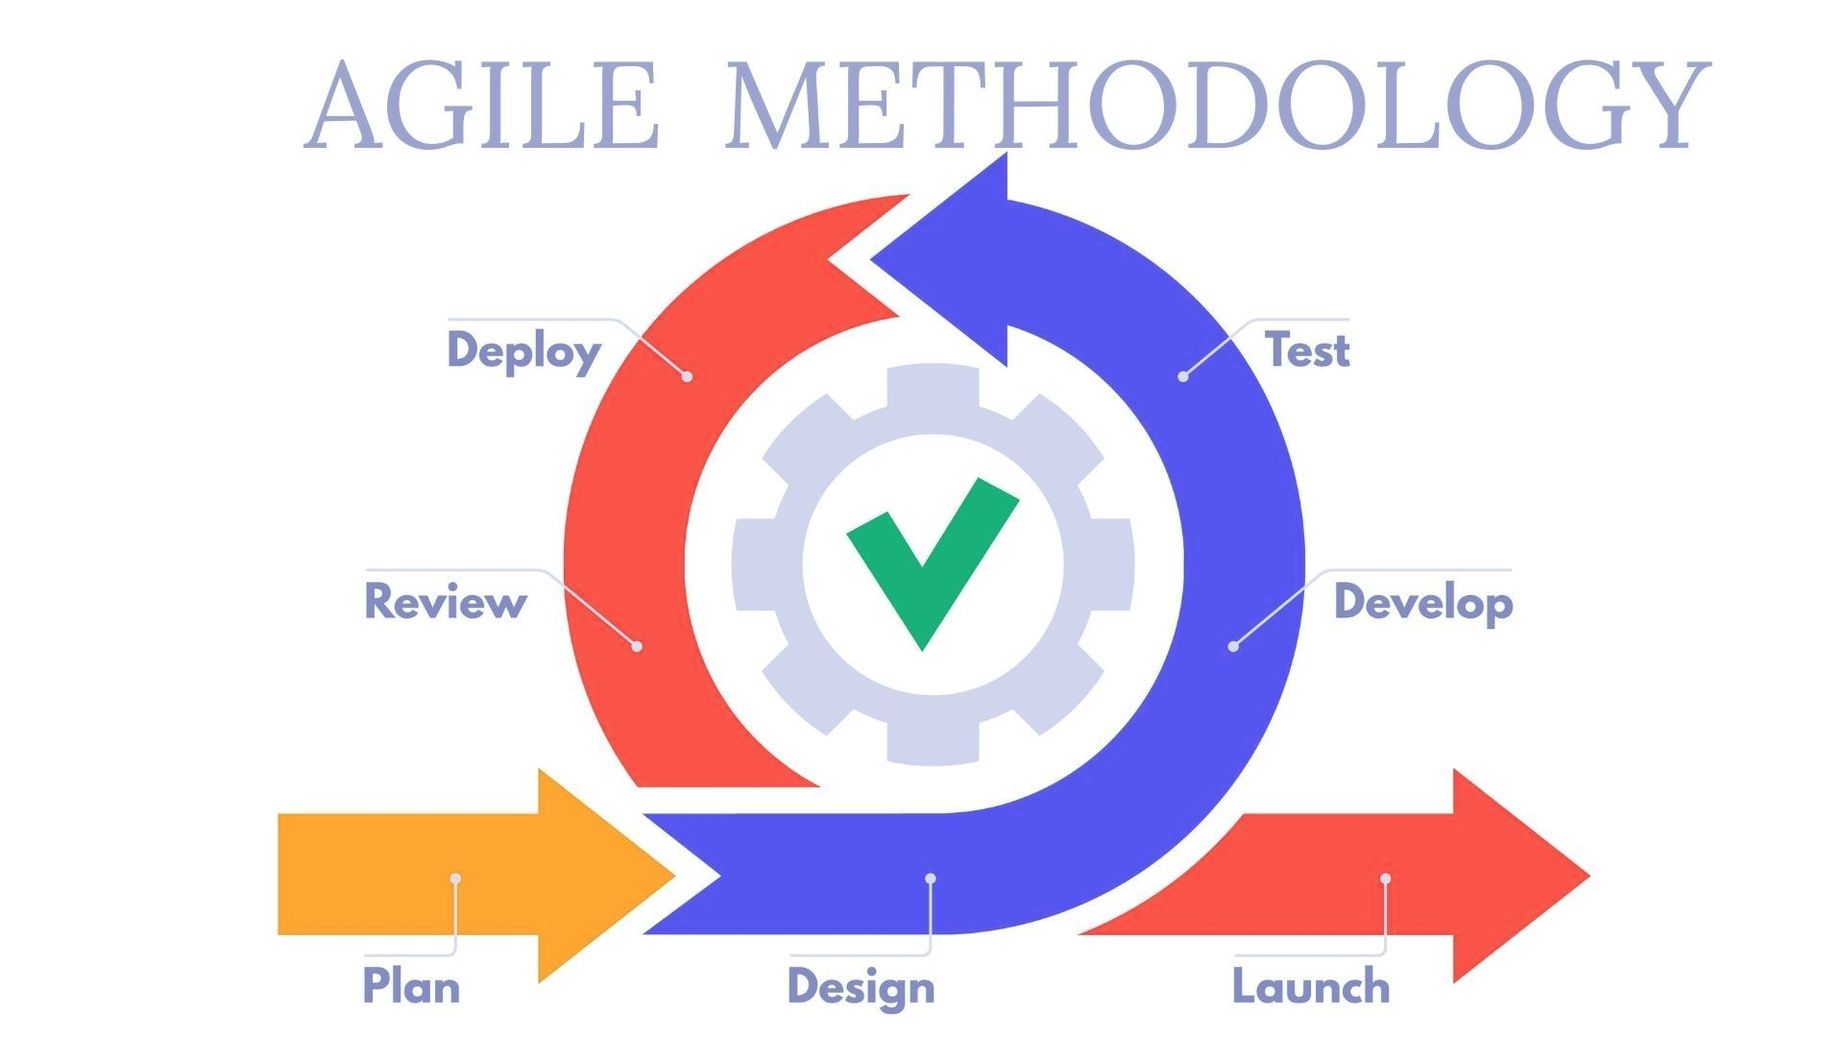 Agile methodology based services